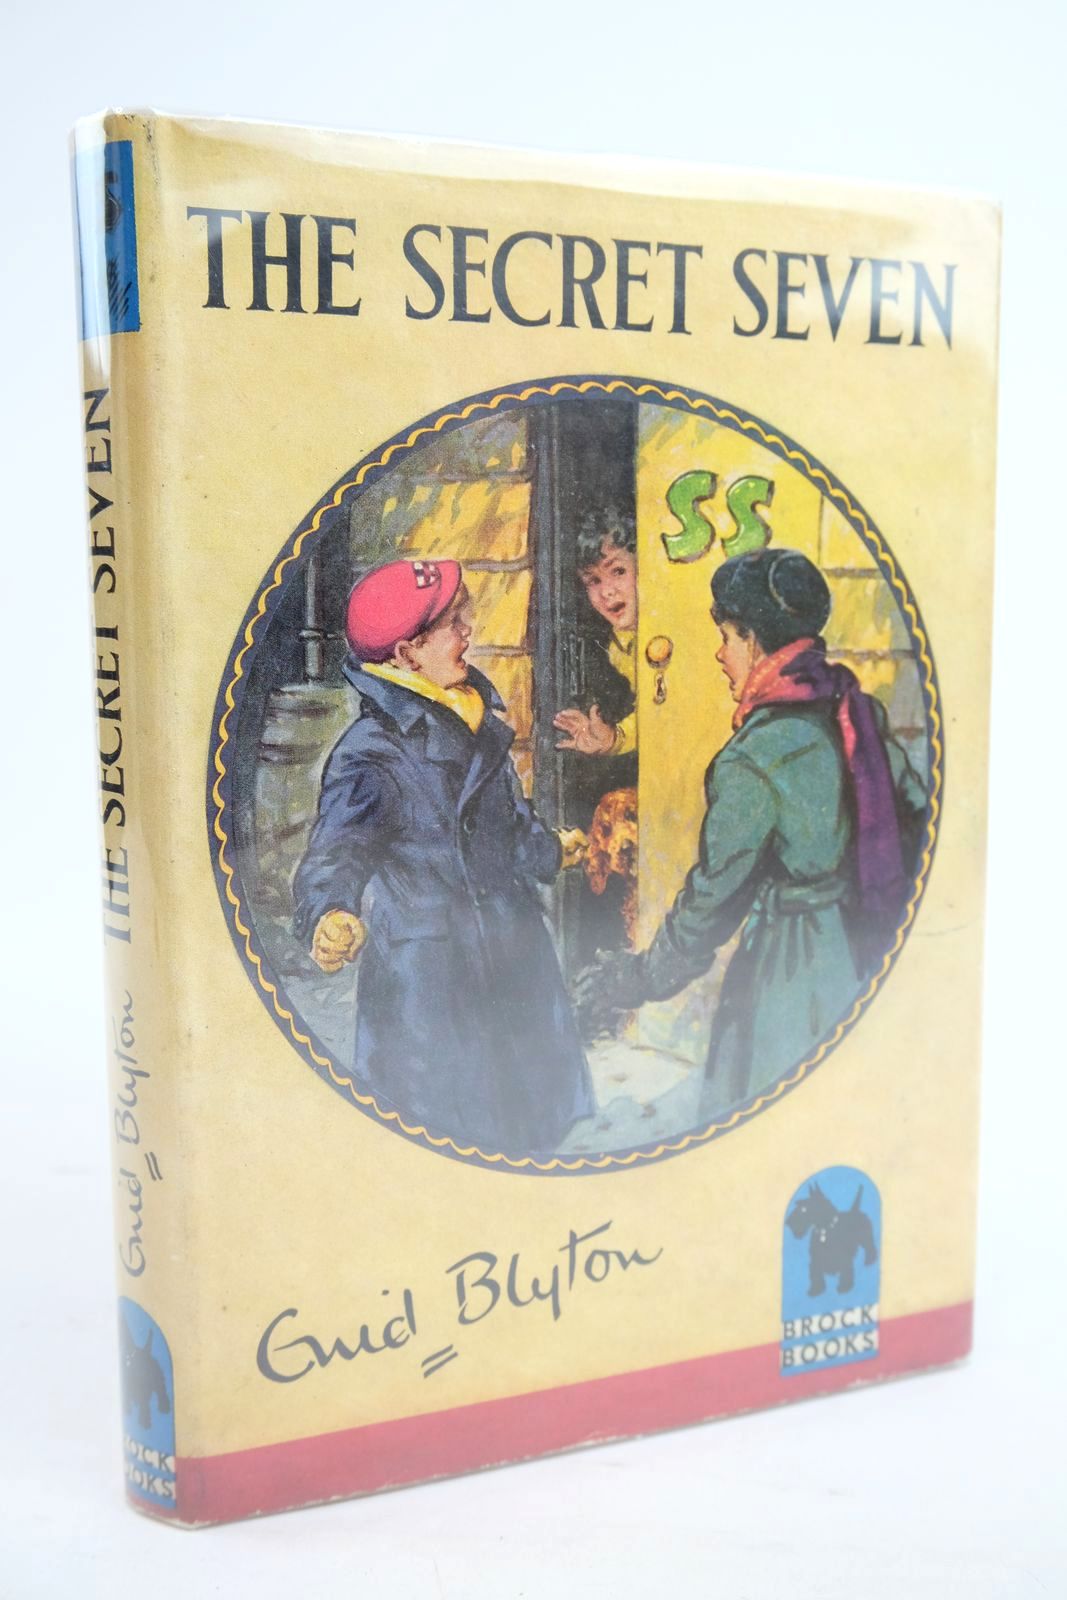 Cover of THE SECRET SEVEN by Enid Blyton